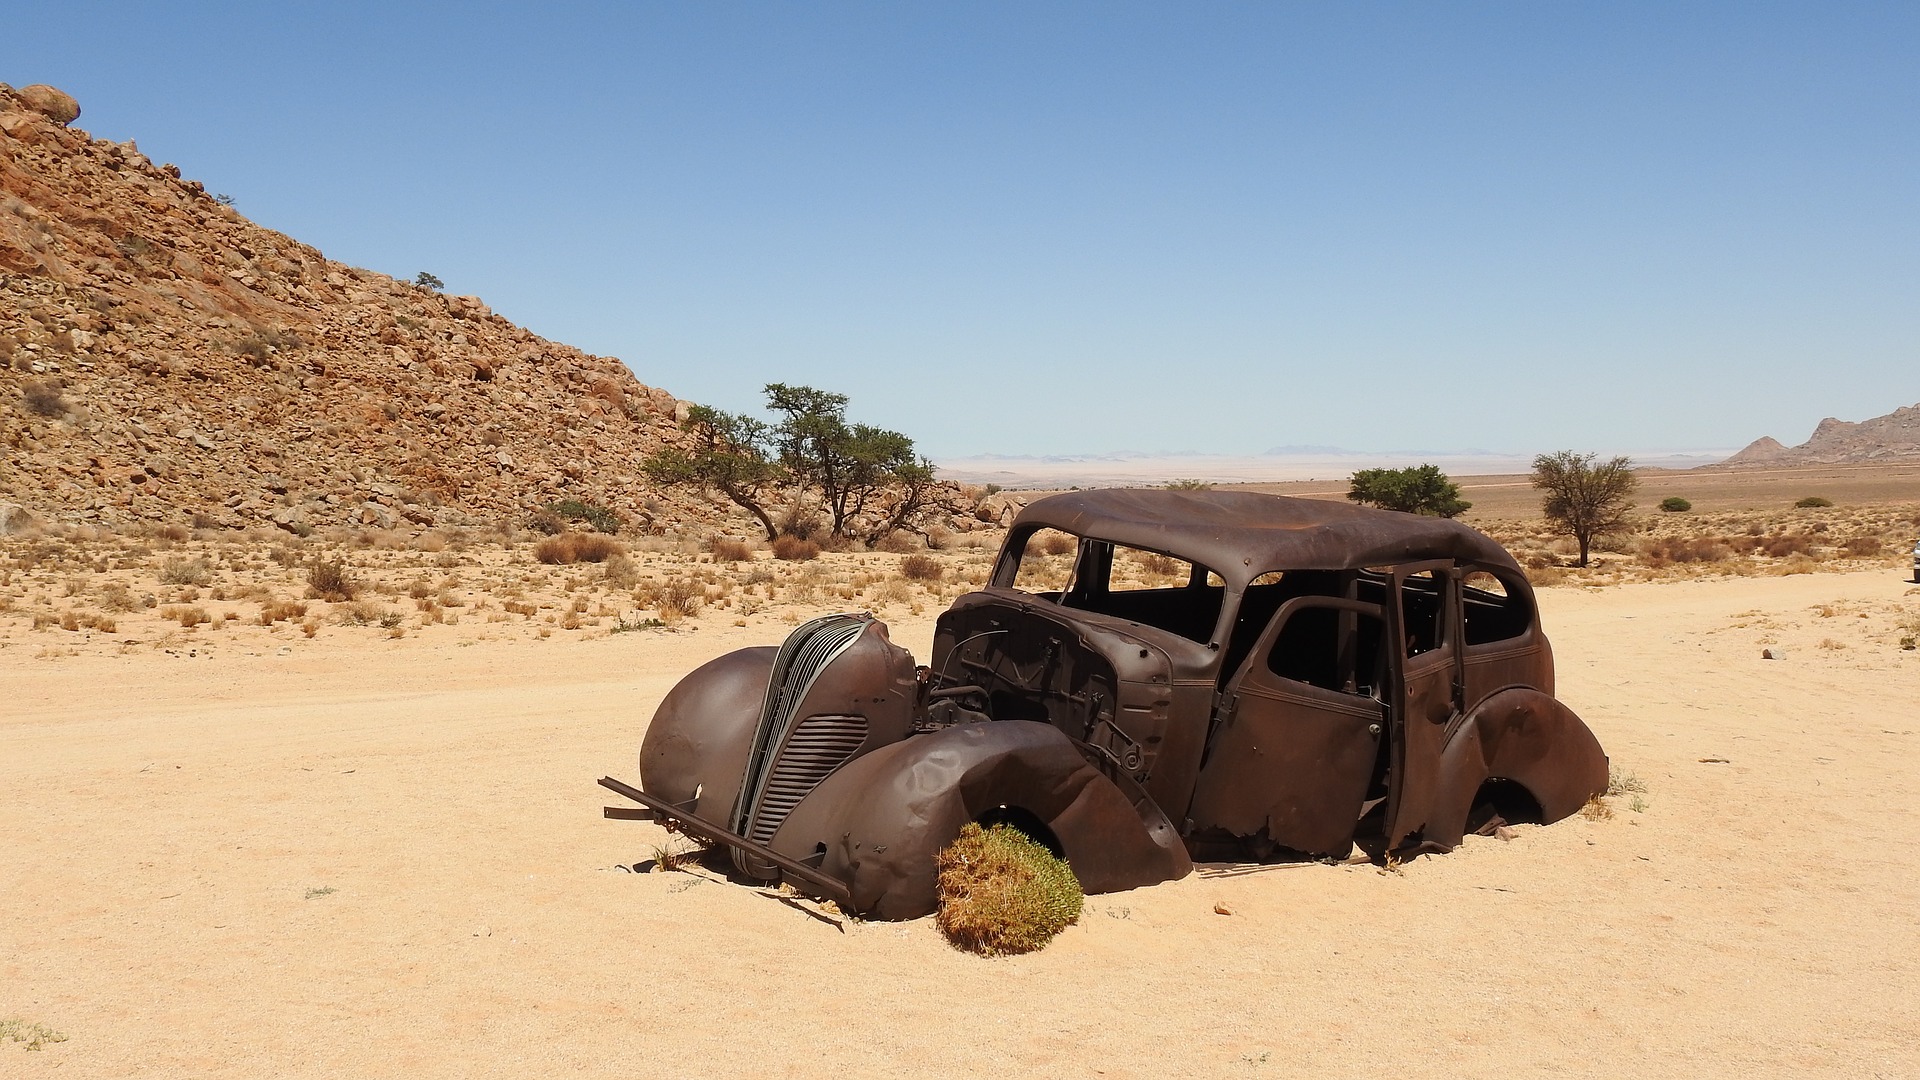 Rusty old wrecked car in the  Kalahari Desert, Africa by Stephan Weyer